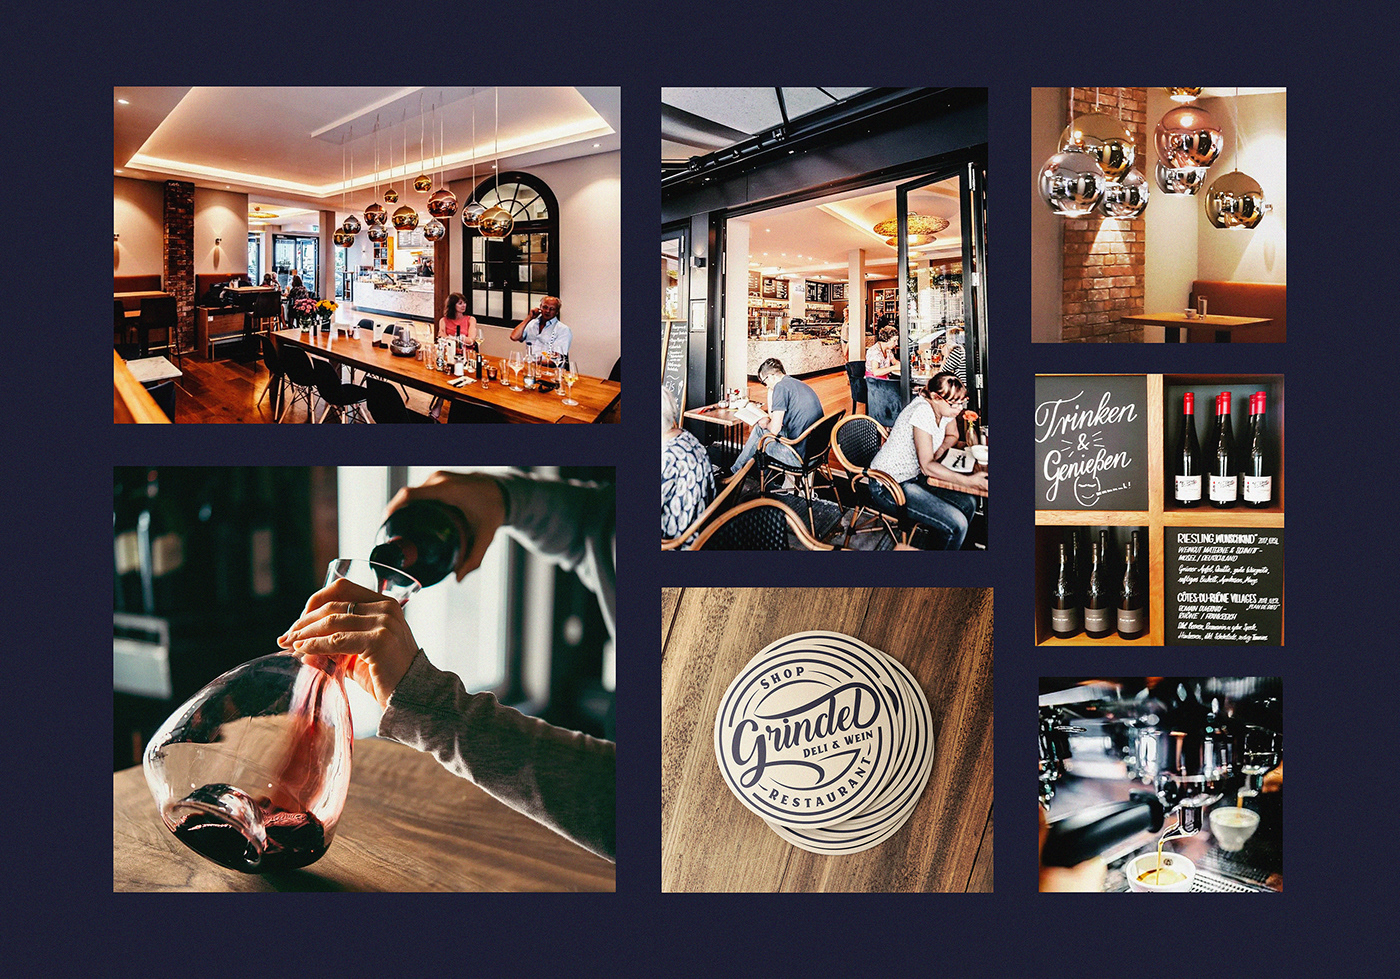 Photographs of the Grindel Deli & Wein restaurant in Hamburg and coaster design.